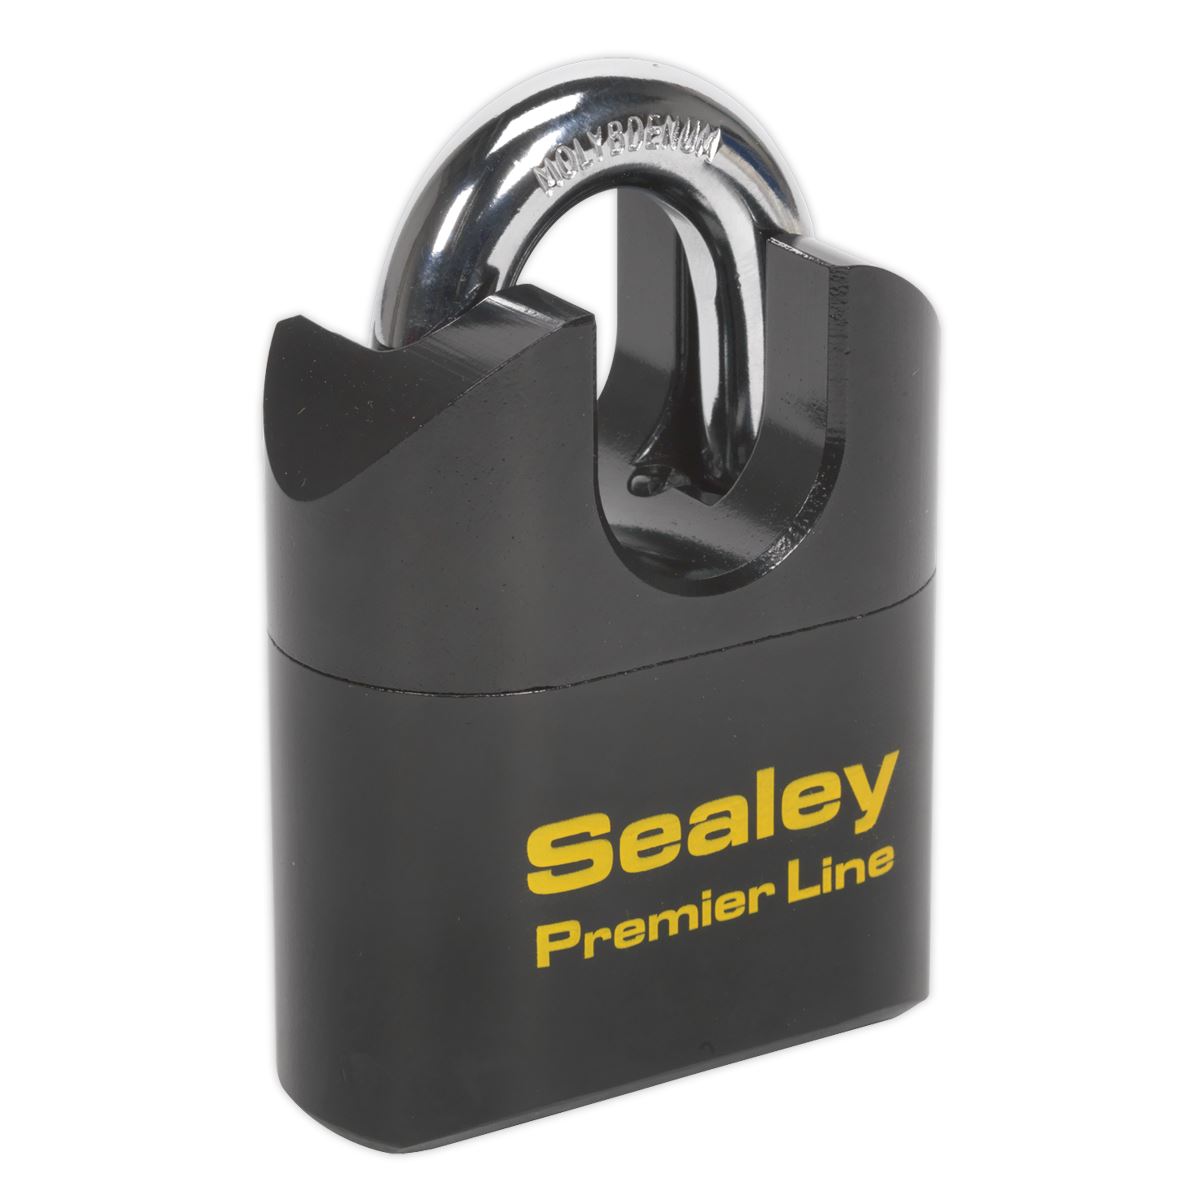 Sealey Premier Steel Body Combination Padlock Shrouded Shackle 62mm